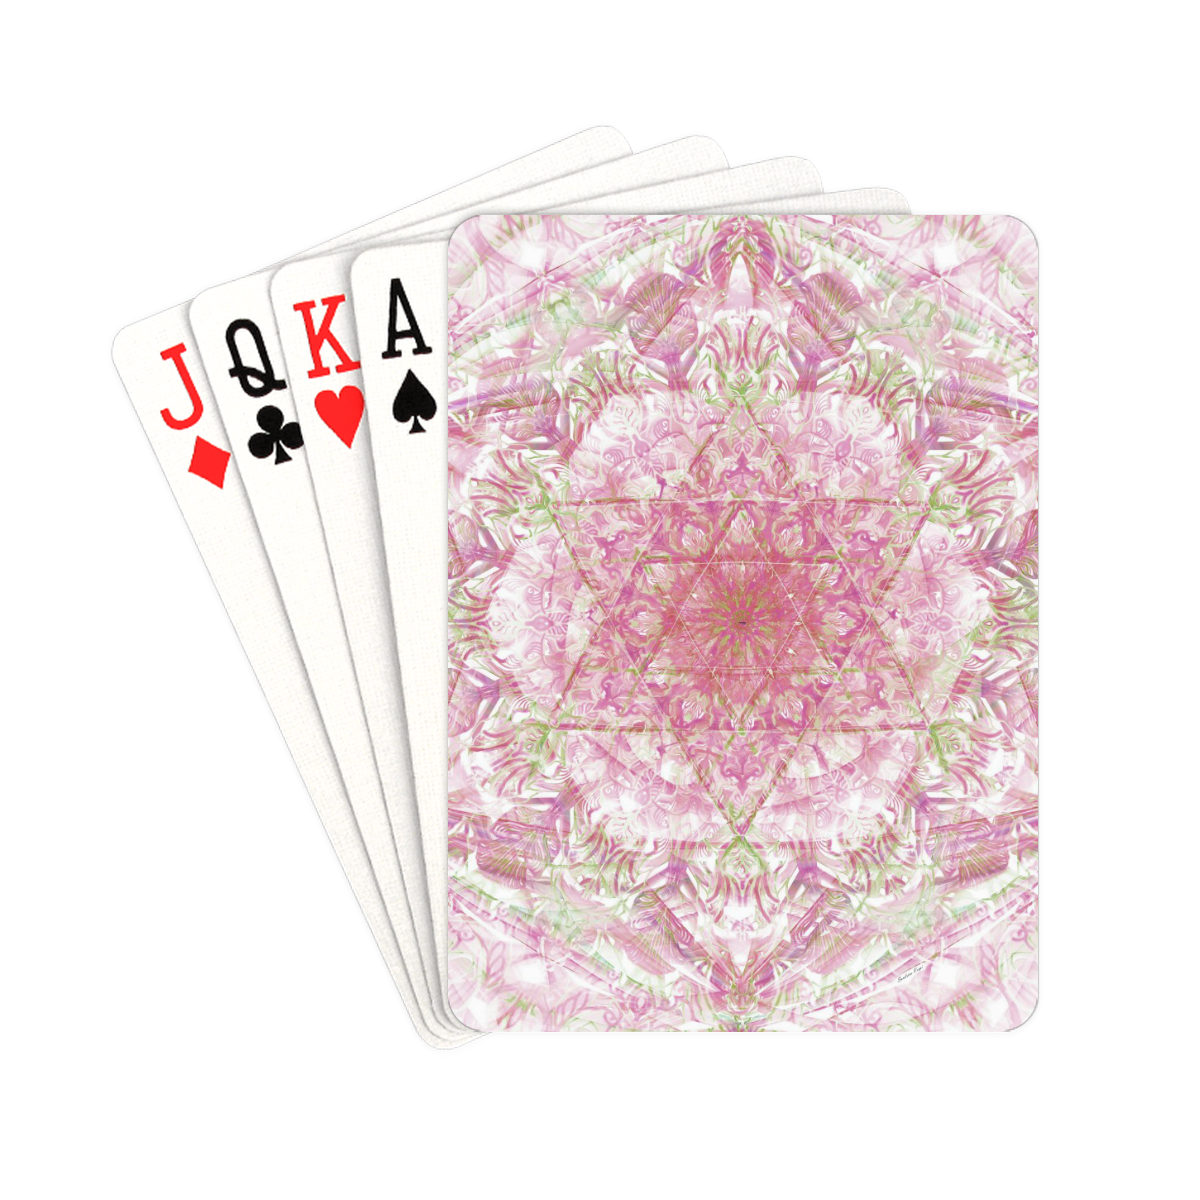 david star mandala 4 Playing Cards 2.5"x3.5"